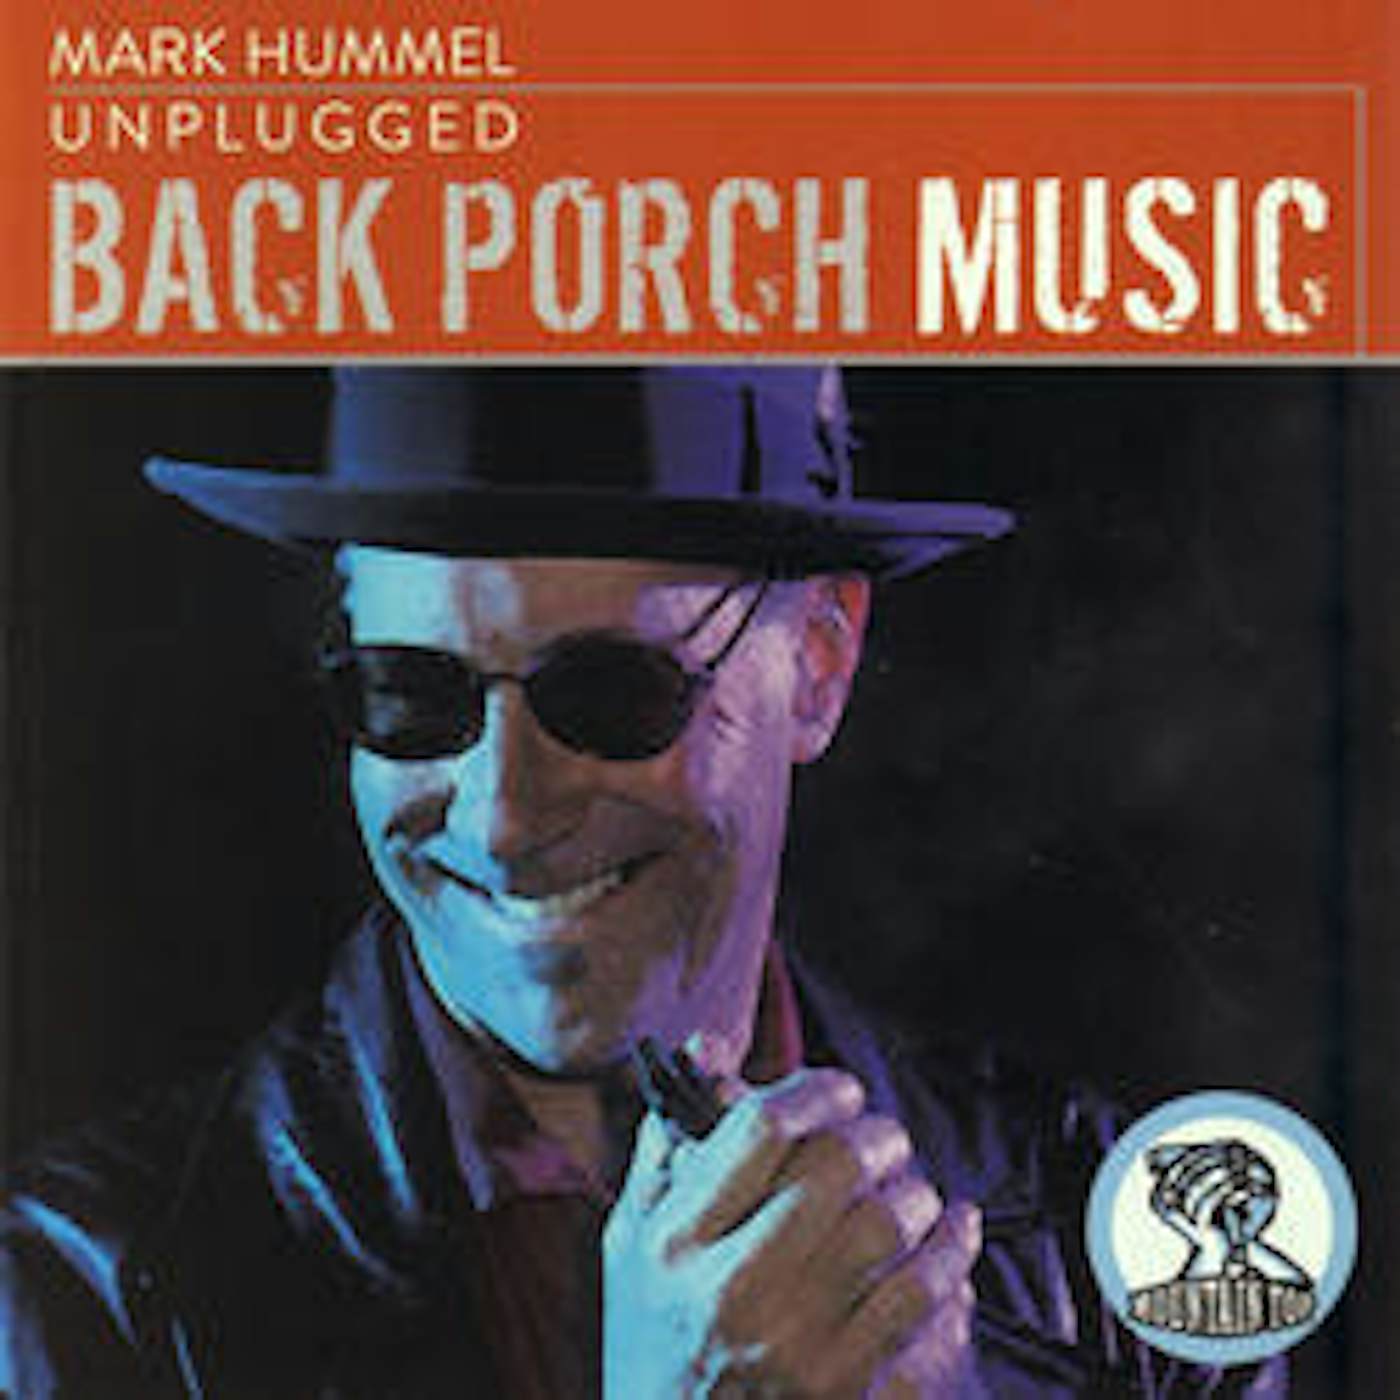 Mark Hummel UNPLUGGED: BACK PORCH MUSIC CD